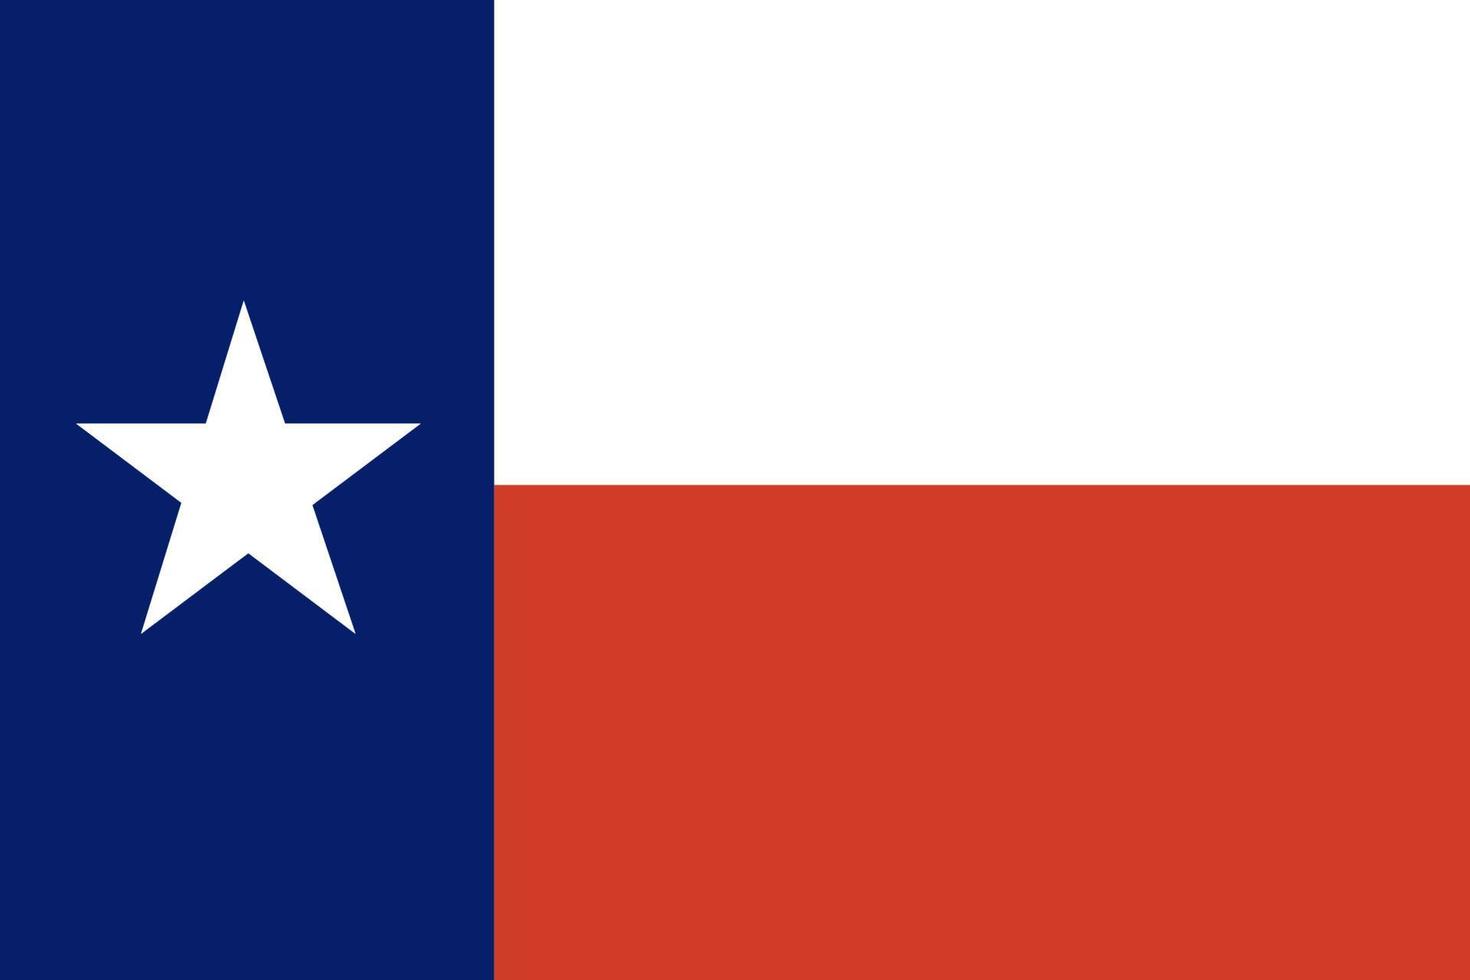 bandeira do texas. cores e proporções oficiais. vetor